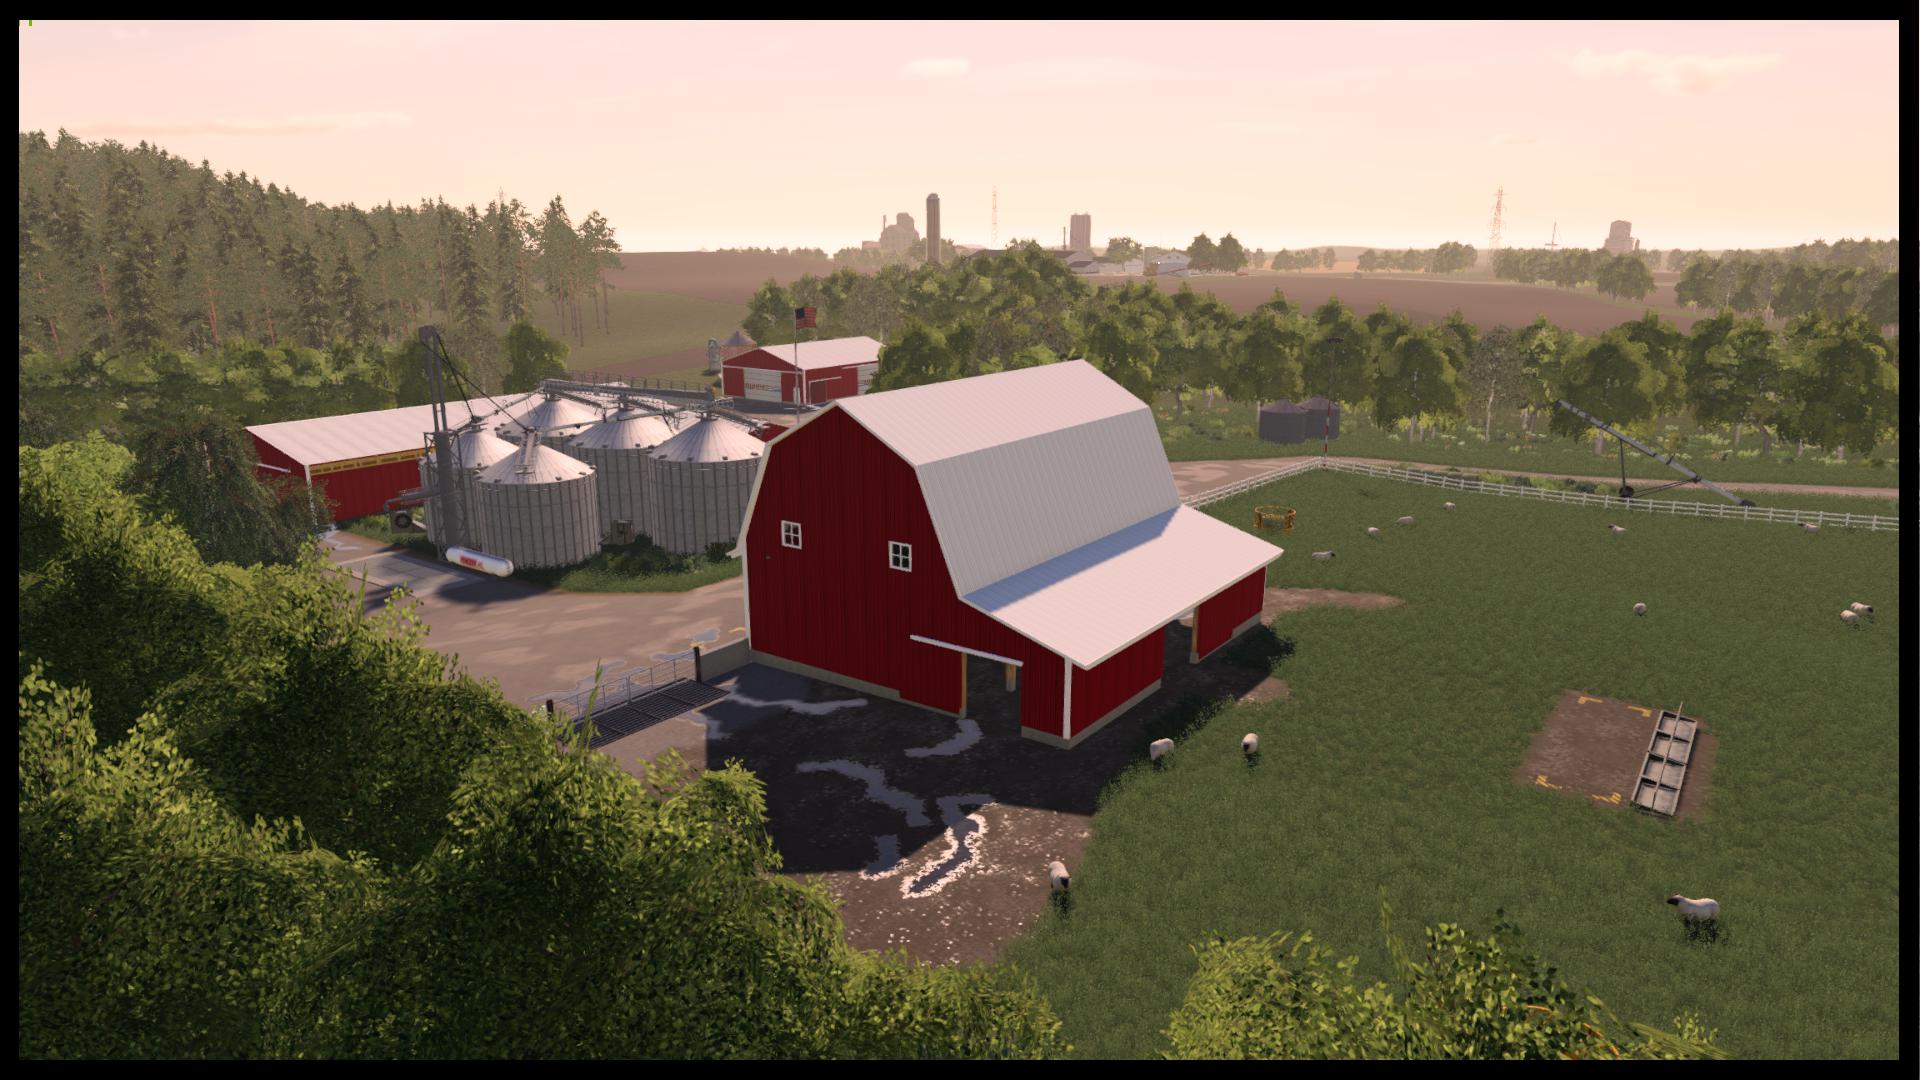 farming simulator 19 american map